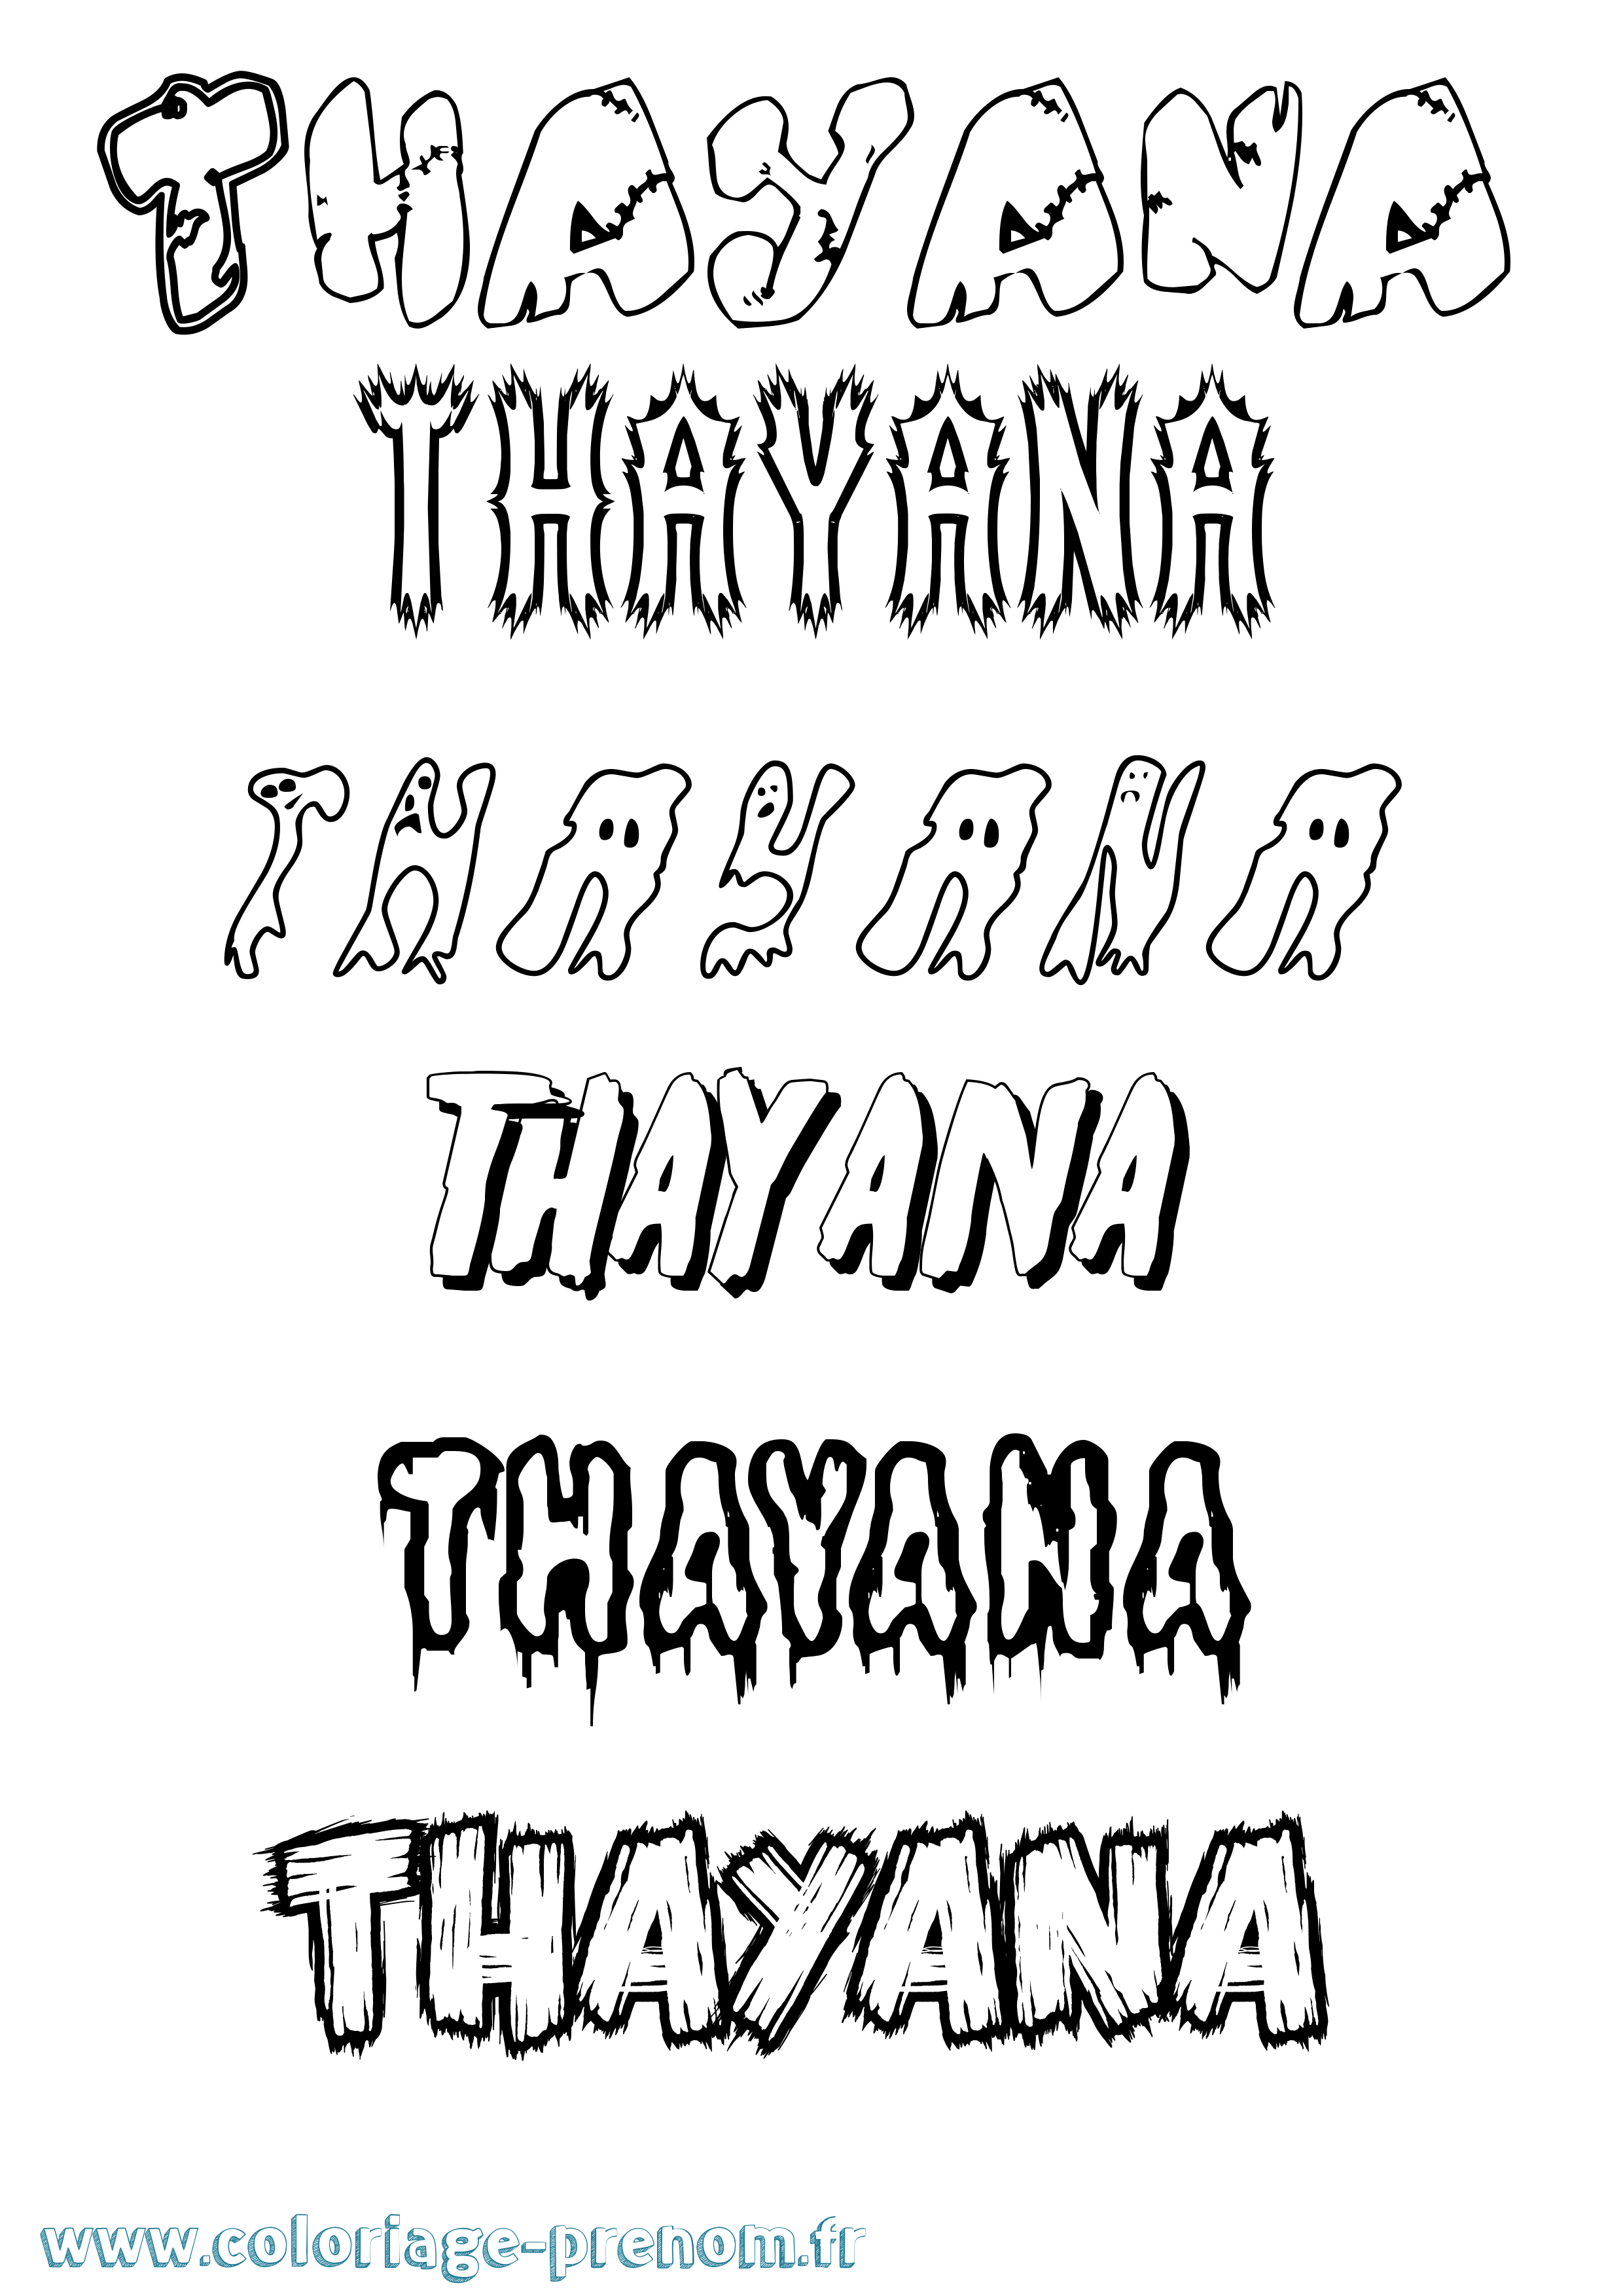 Coloriage prénom Thayana Frisson